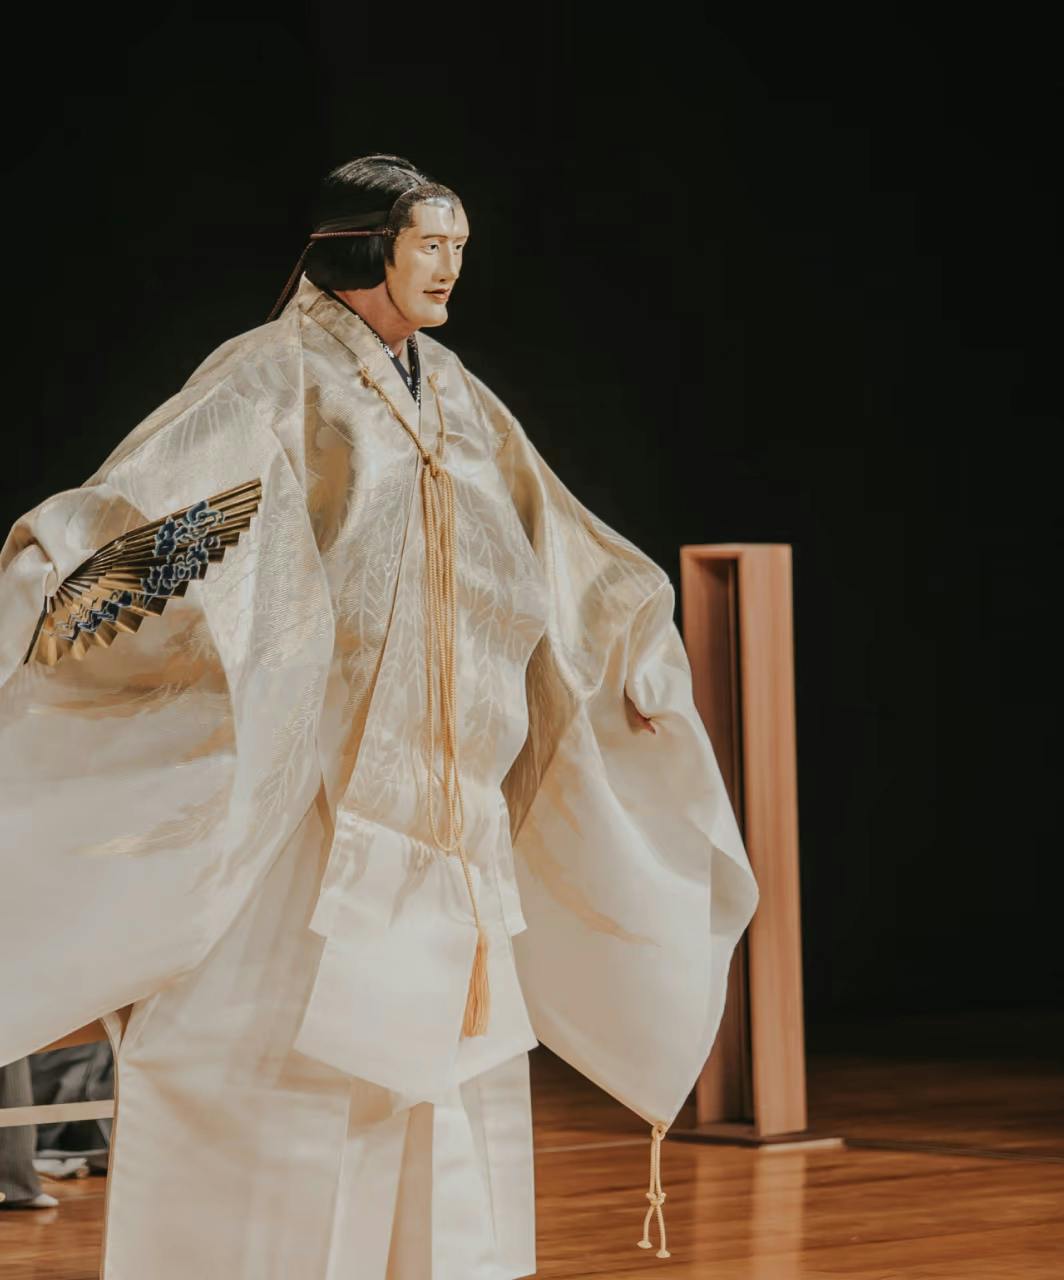 Japanese performer